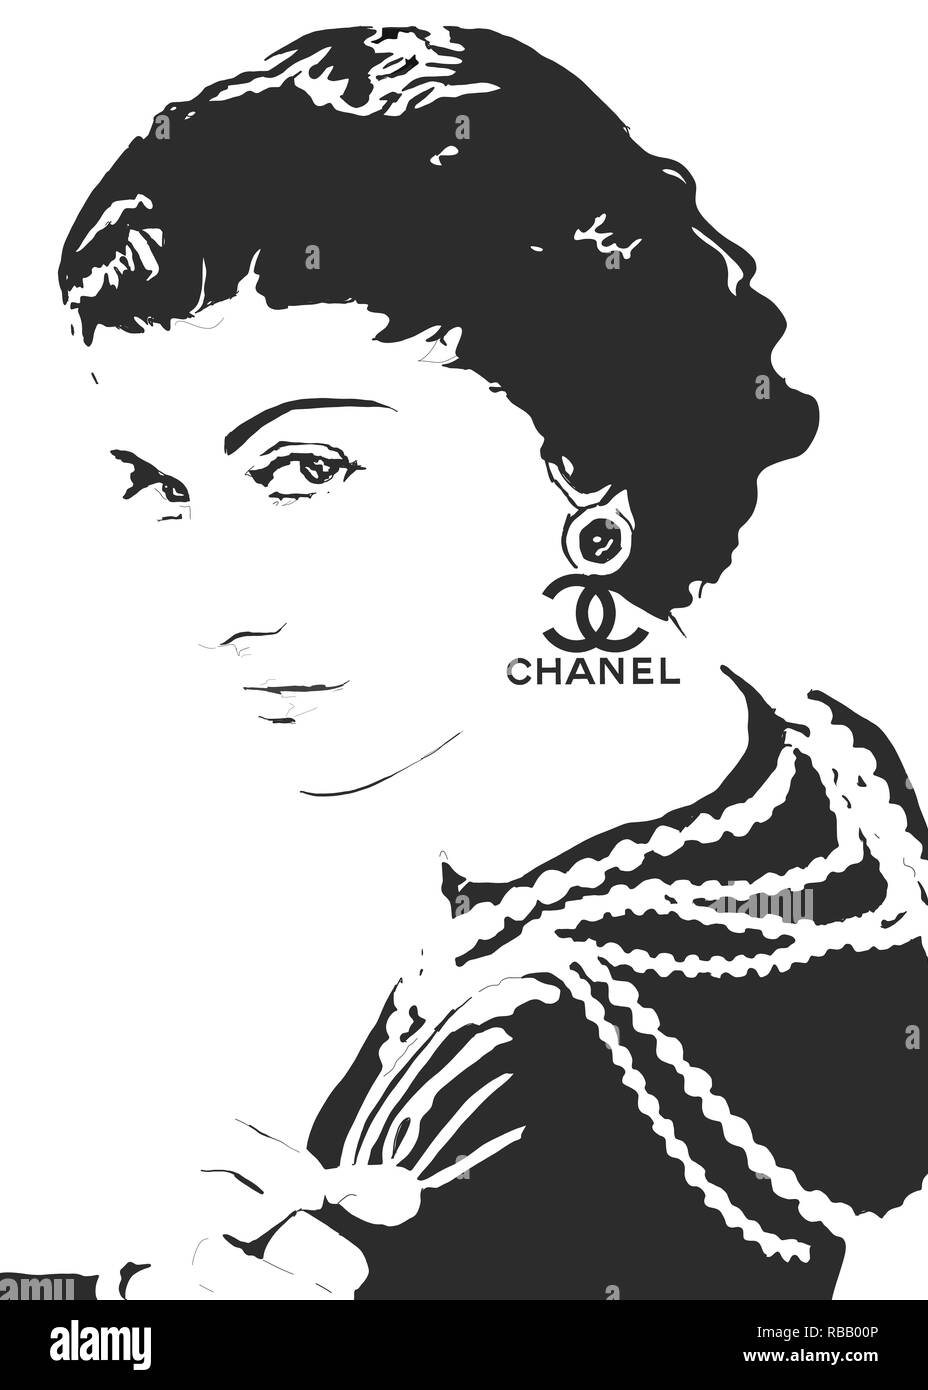 Coco chanel illustration Stock Photo - Alamy